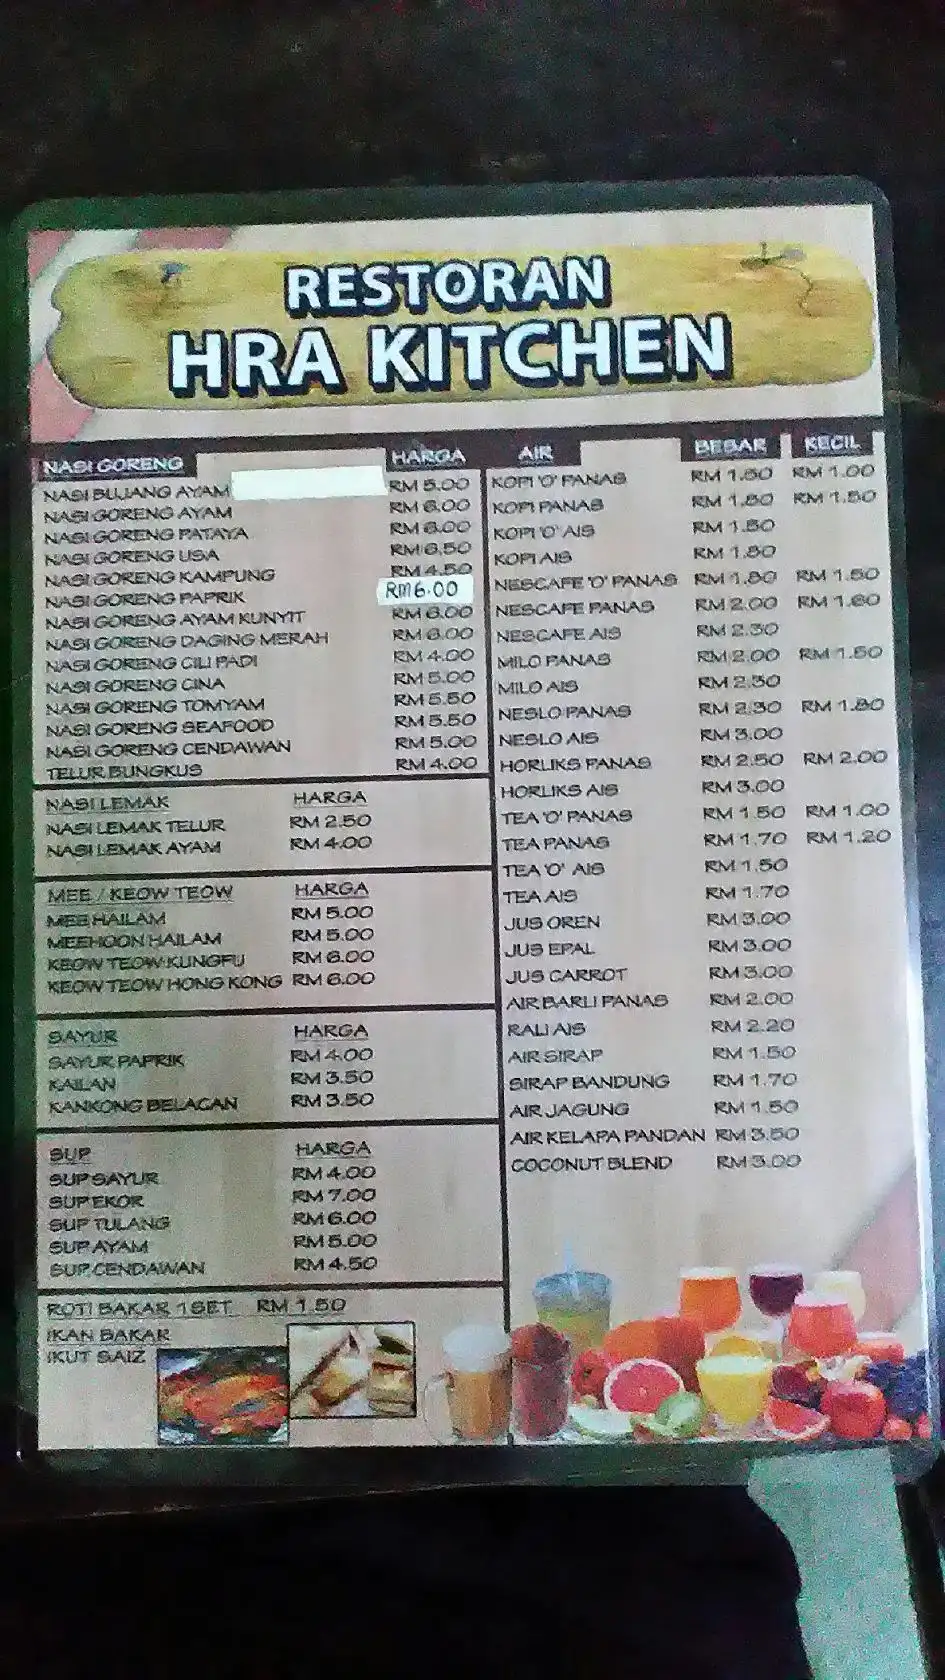 Restoran HRA Kitchen Masakkan Kampung Dan Seafood